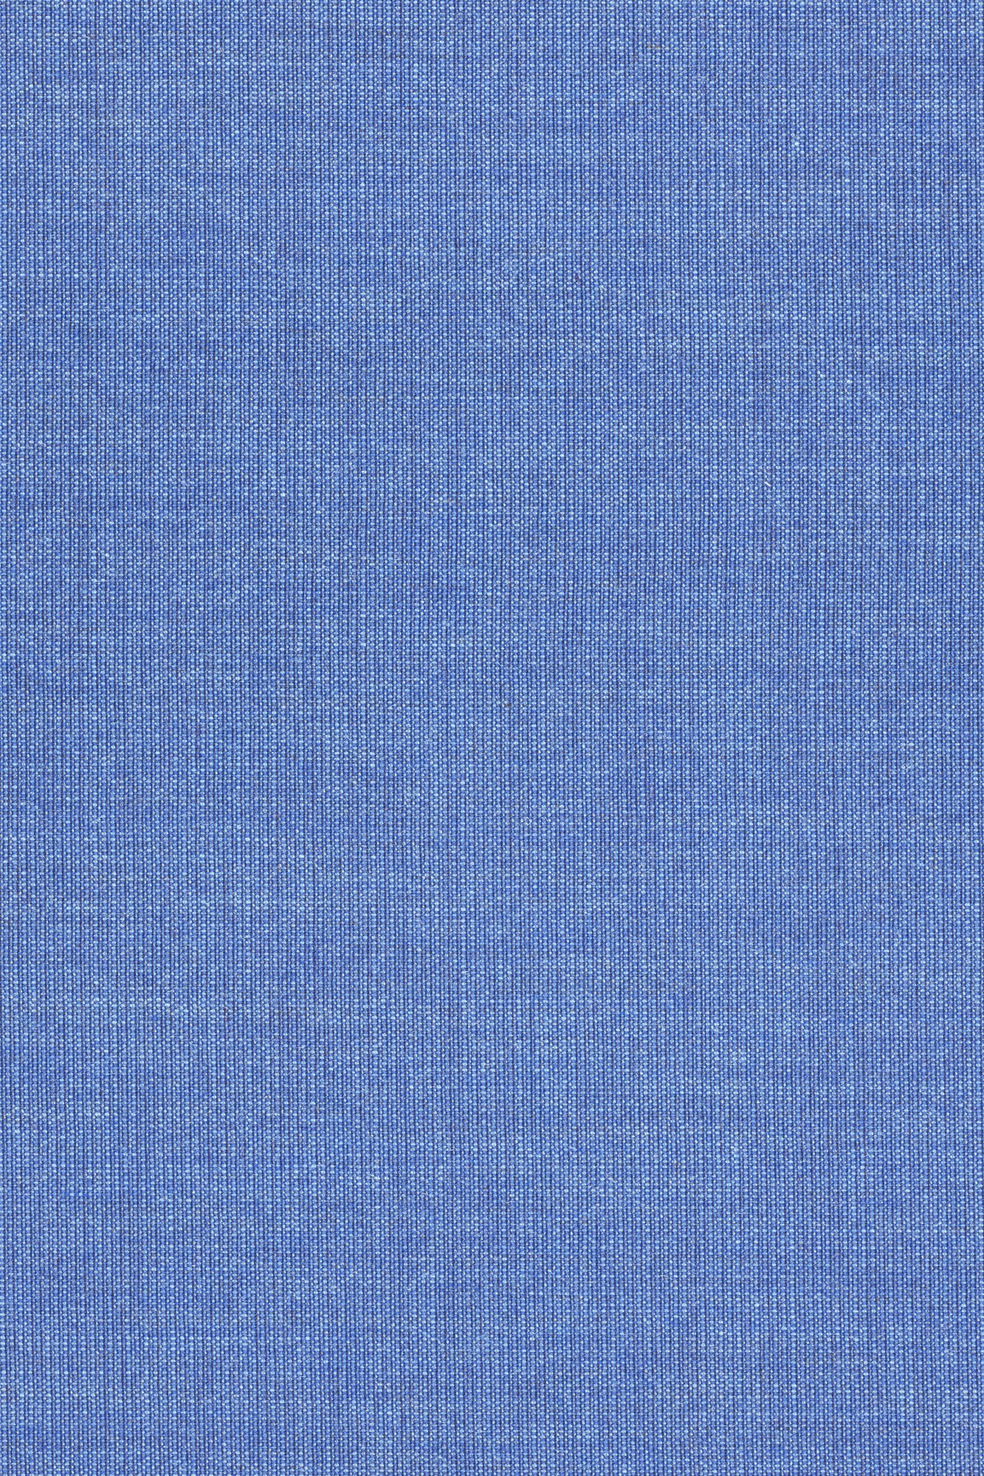 Fabric sample Canvas 2 746 blue